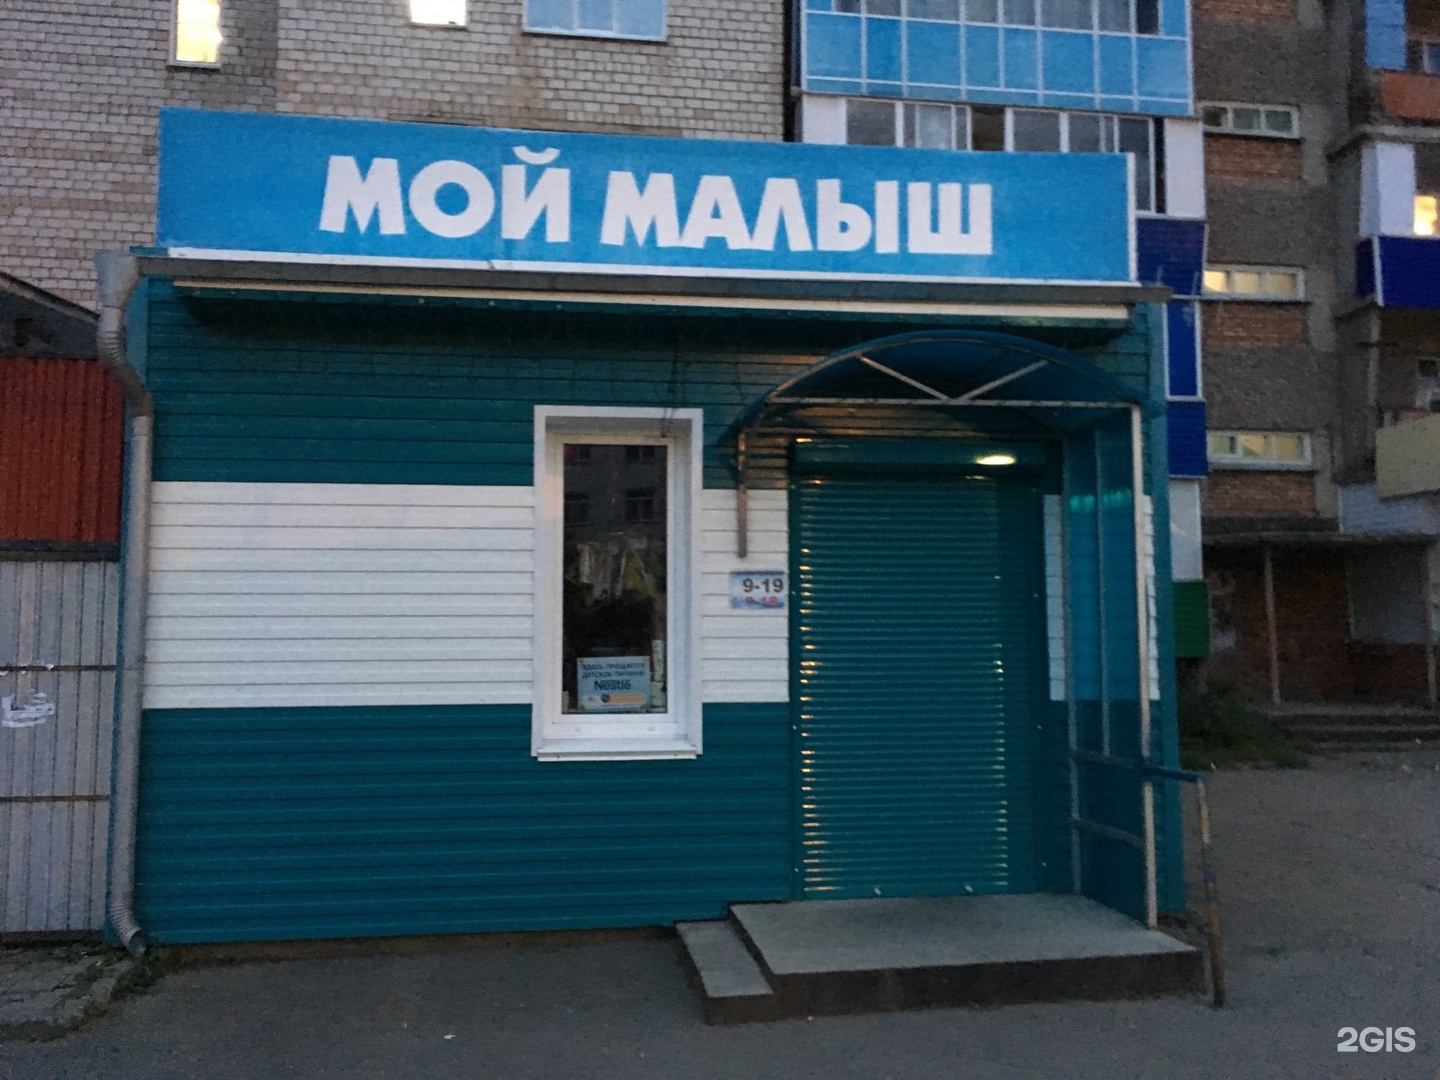 Магазин Обои Саяногорск